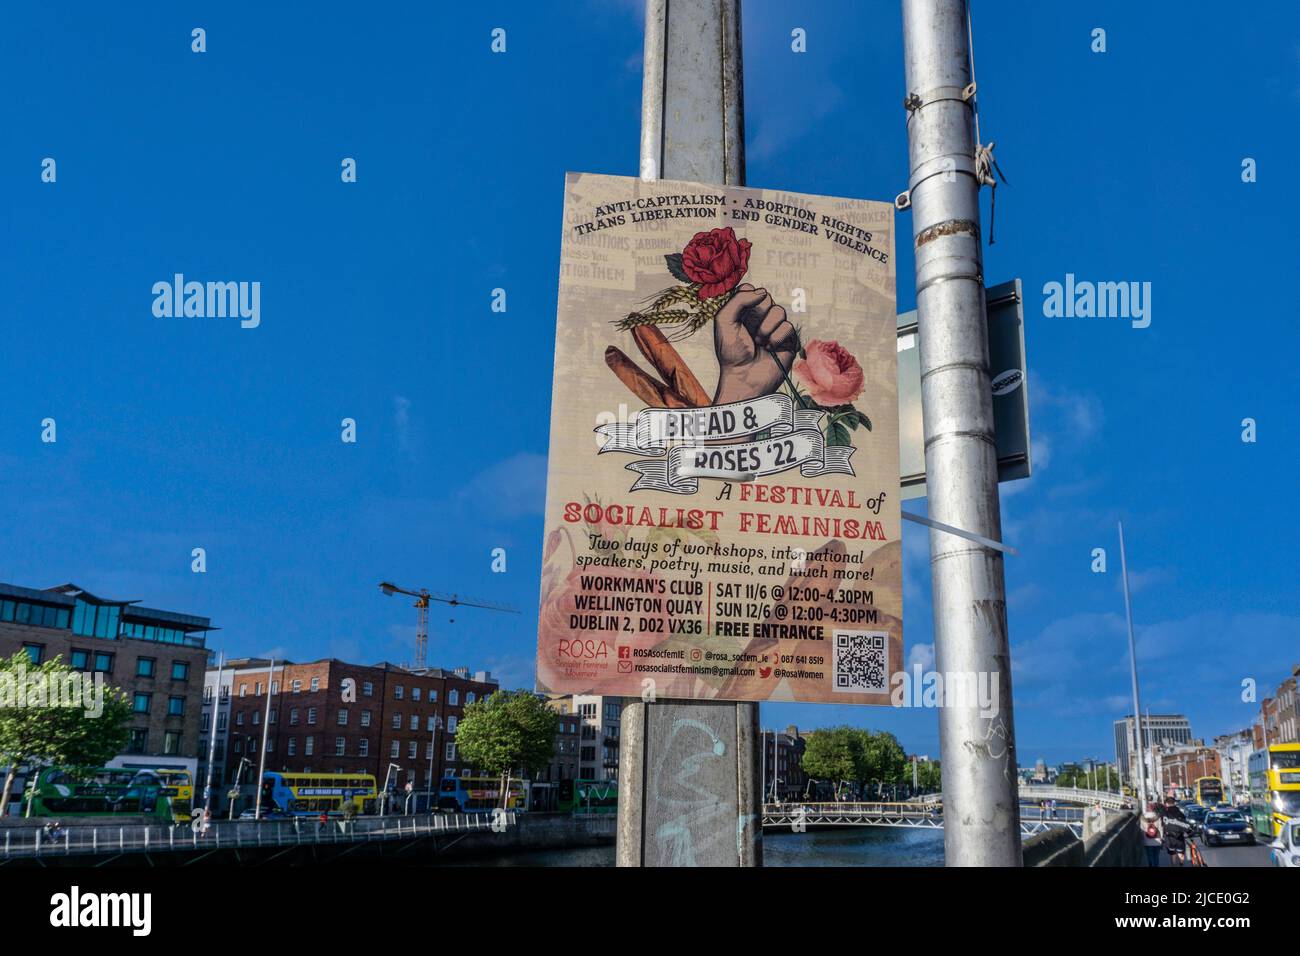 Un cartel para Bread and Roses 22, un festival de feminismo socialista, en Dublín, Irlanda. Foto de stock